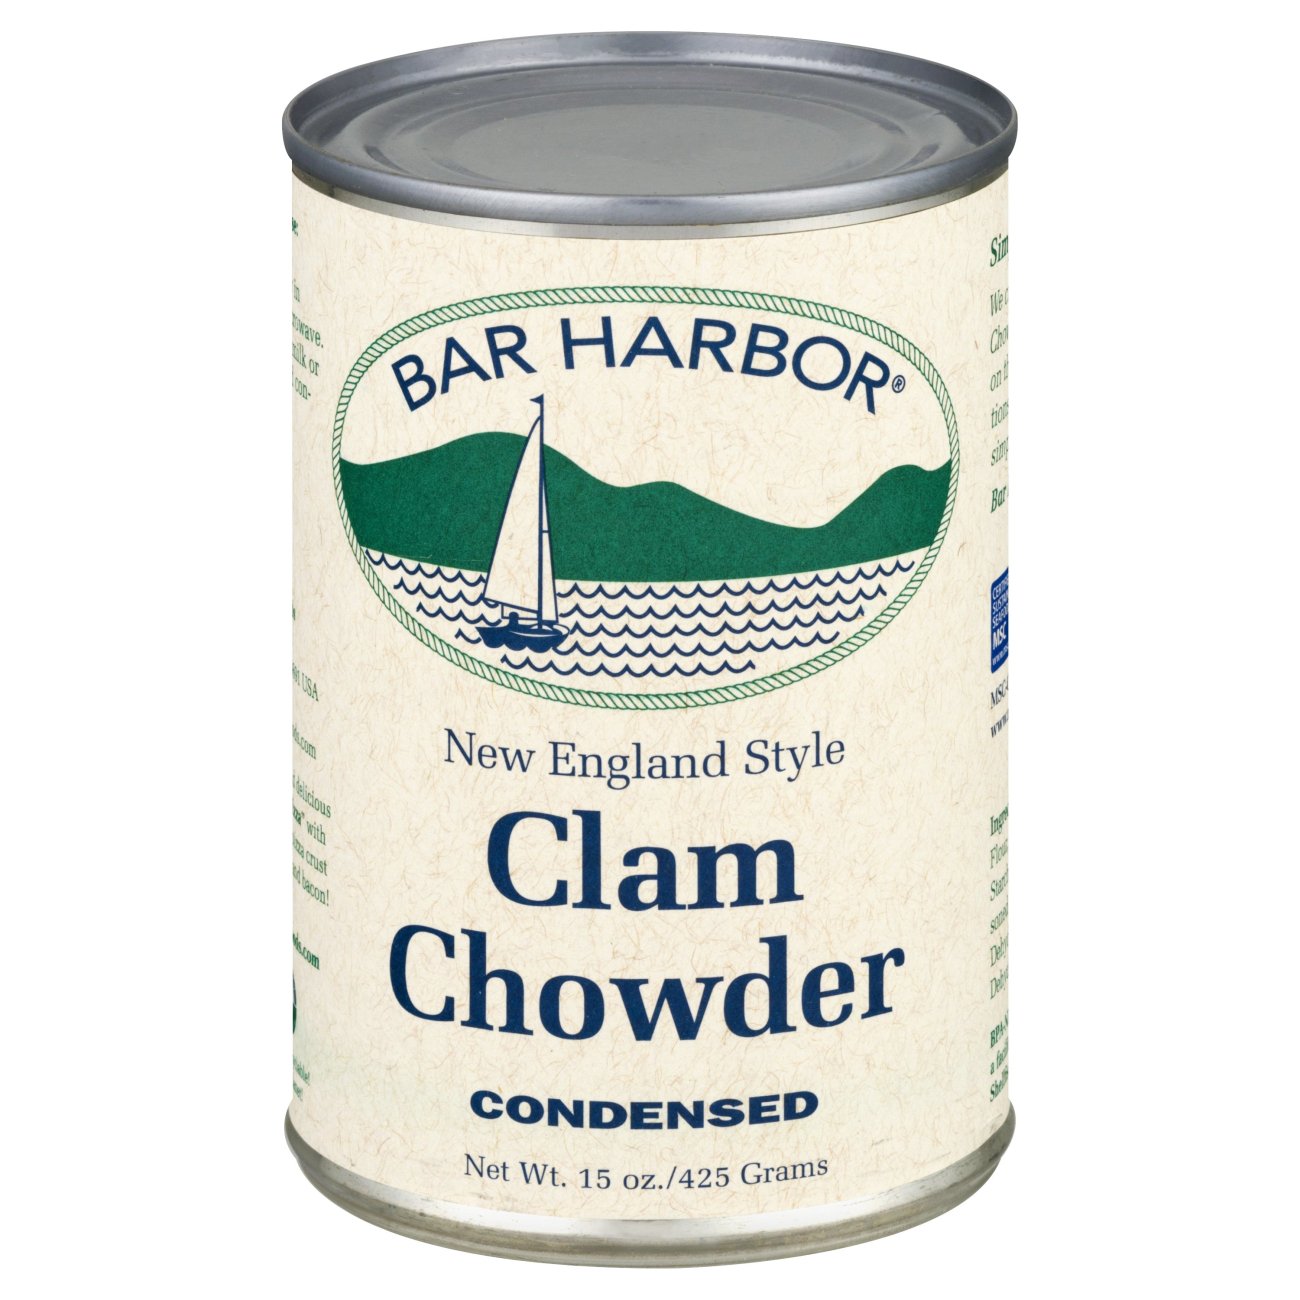 clam chowder can